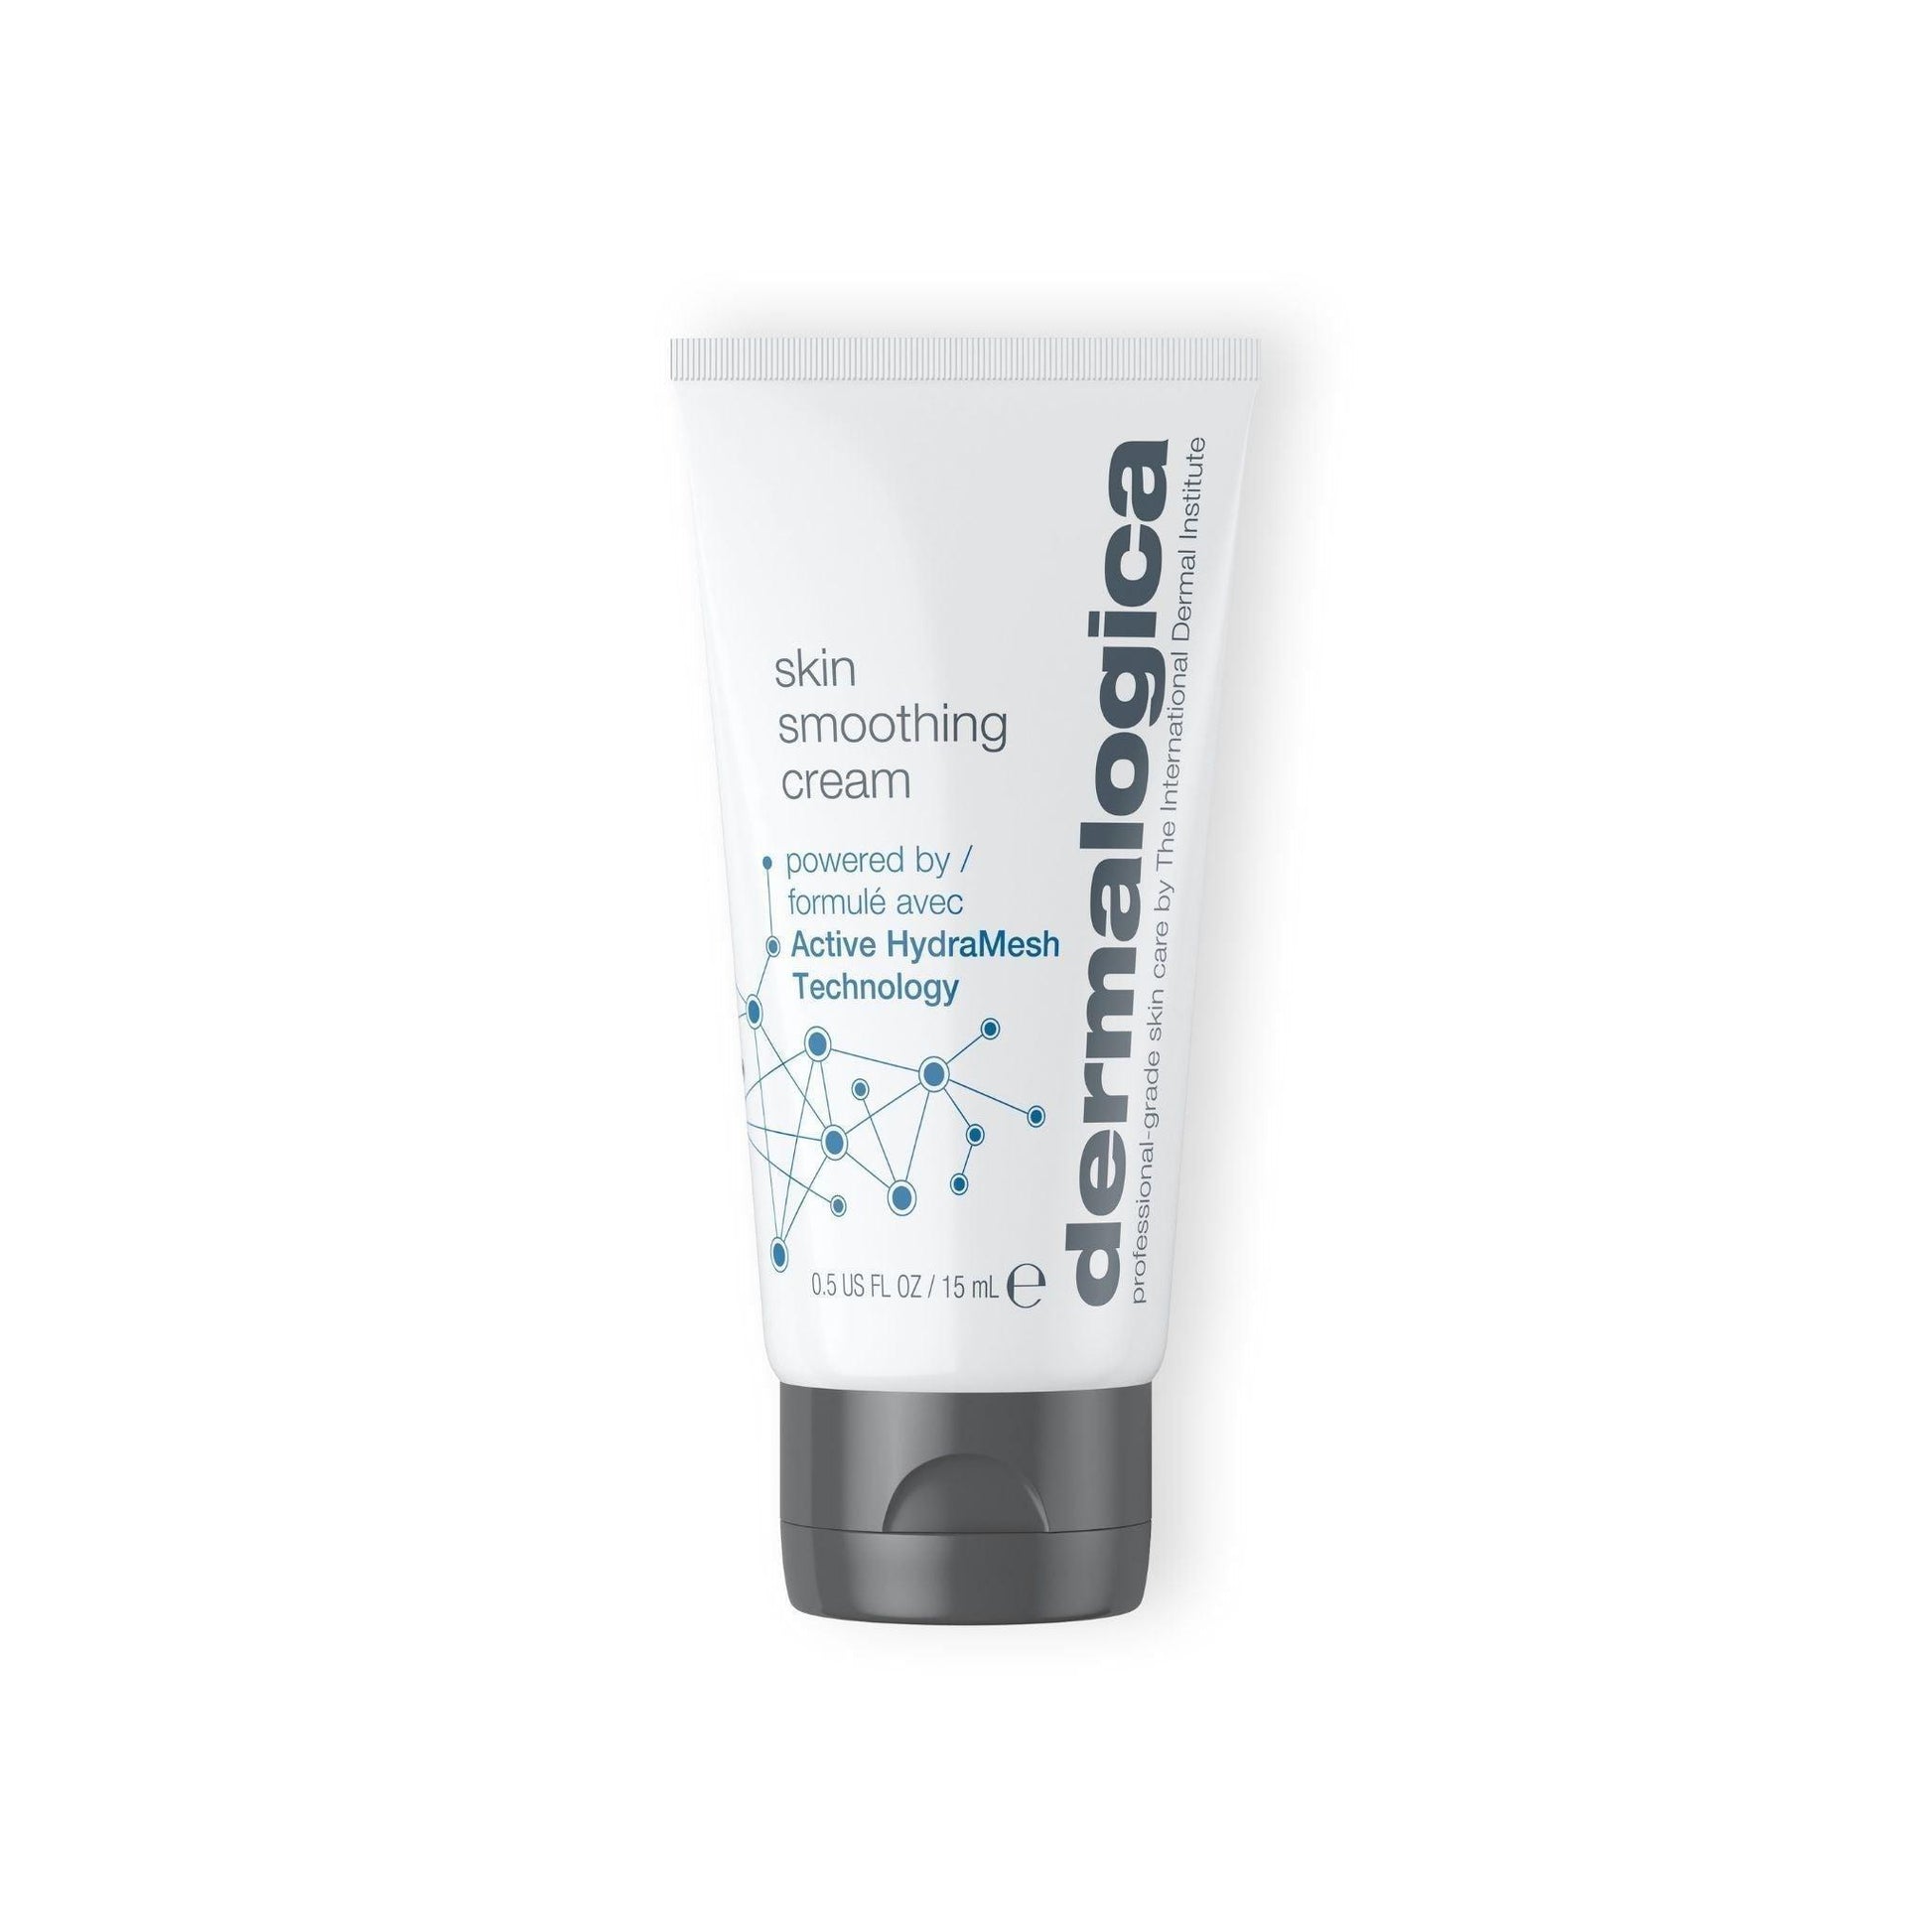 skin smoothing cream 15ml (gift, not for sale) - Dermalogica Hong Kong